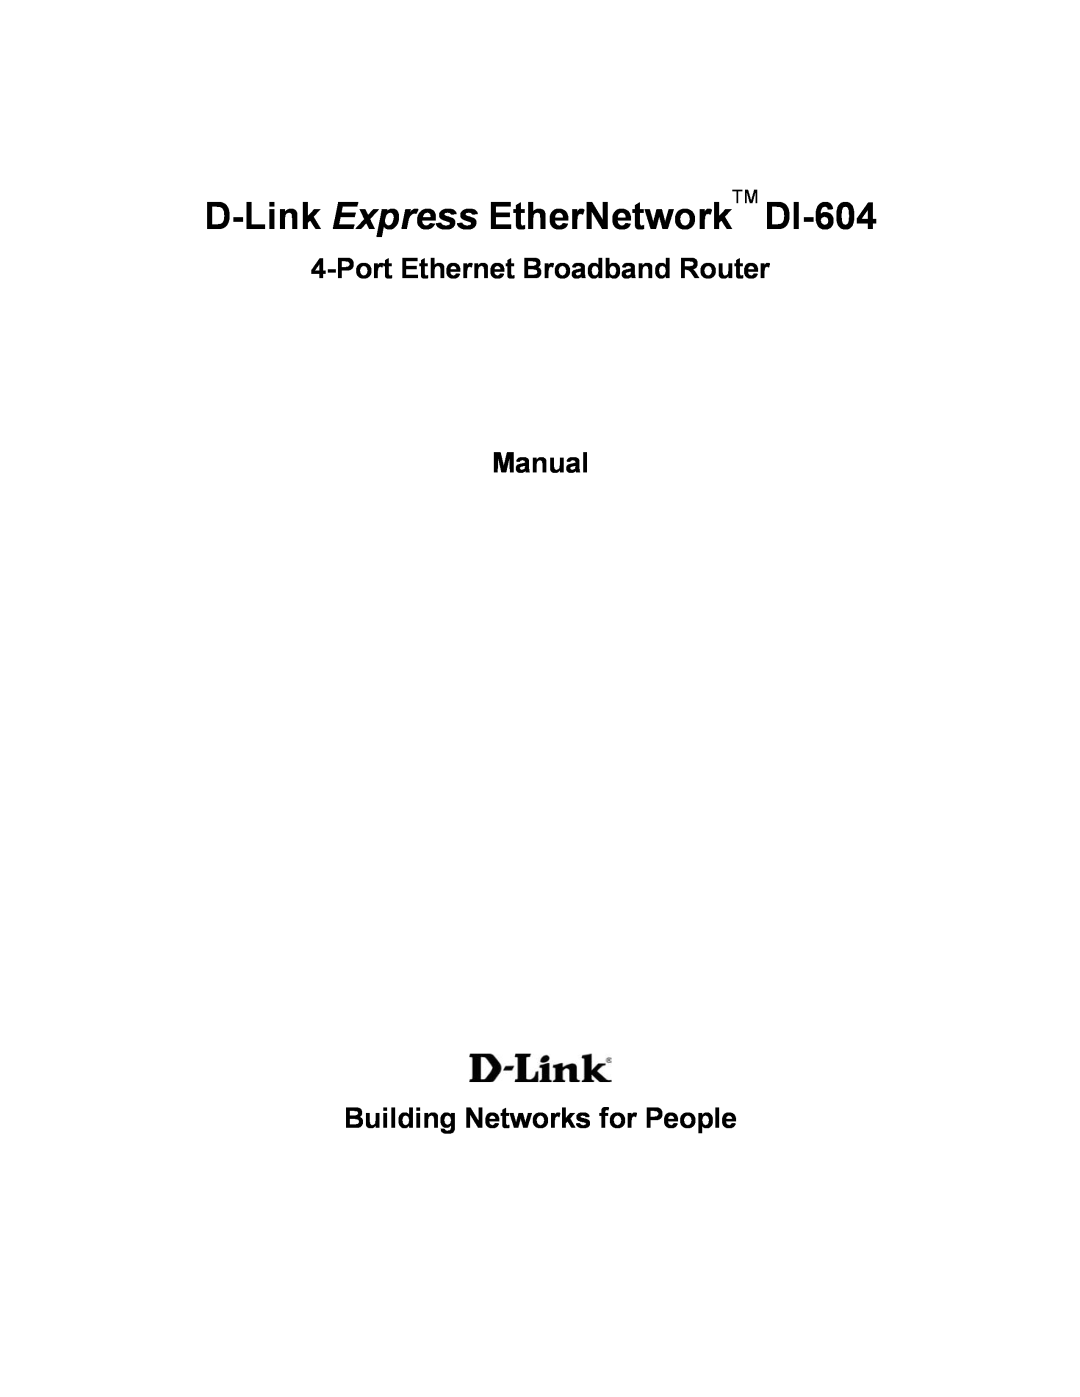 D-Link manual D-Link Express EtherNetworkTM DI-604, Port Ethernet Broadband Router Manual Building Networks for People 